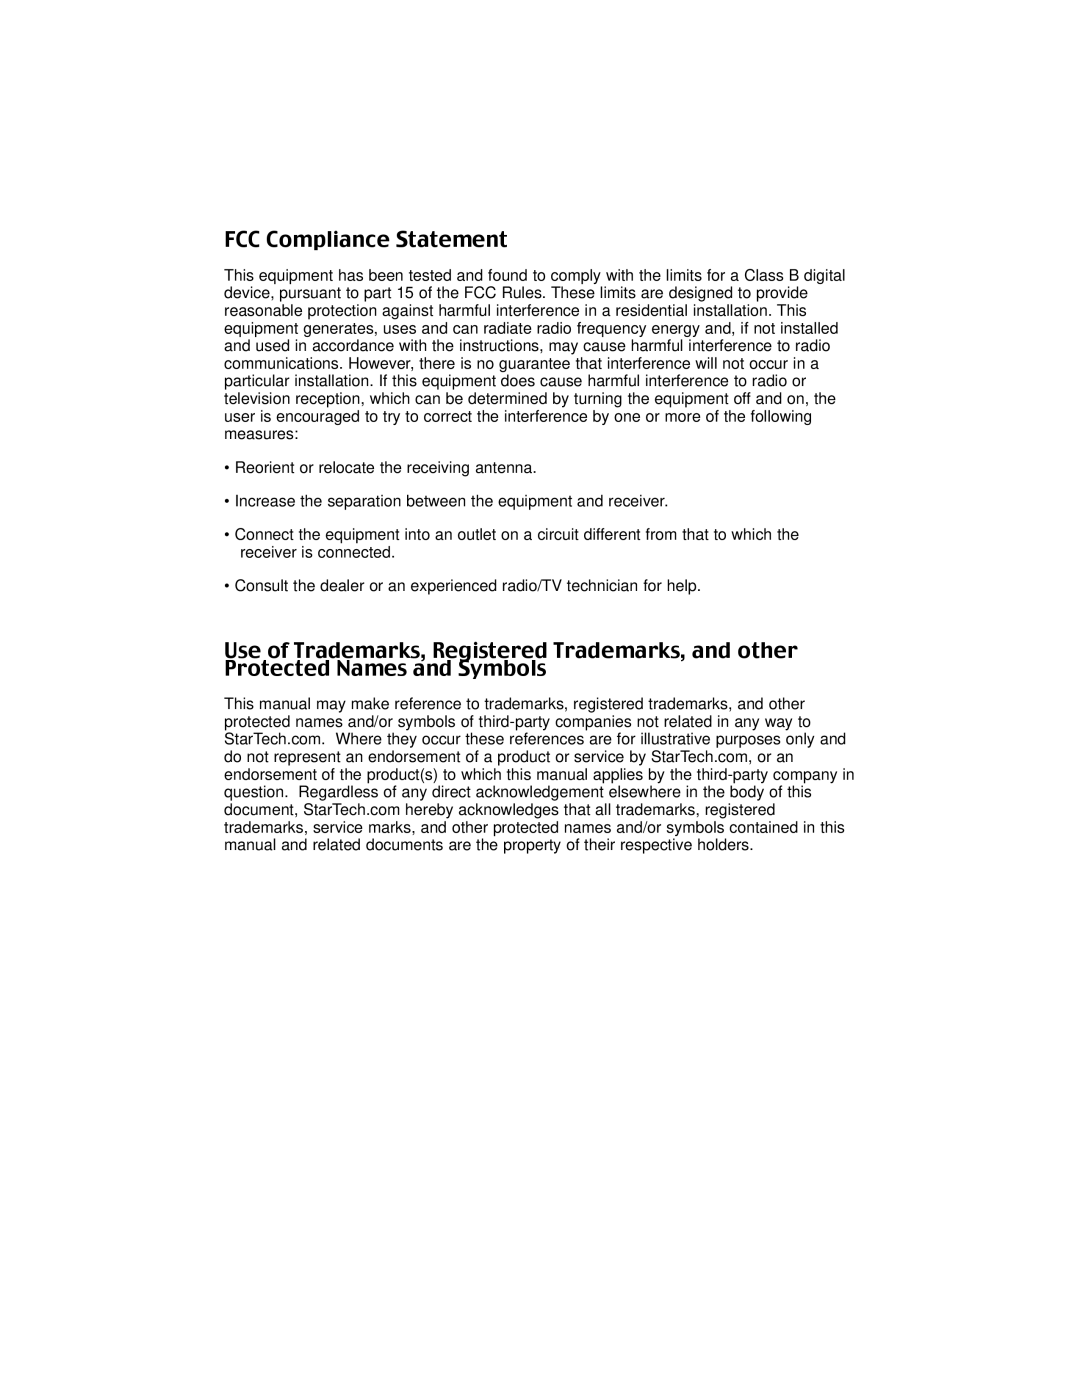 StarTech.com CB420USB instruction manual FCC Compliance Statement 